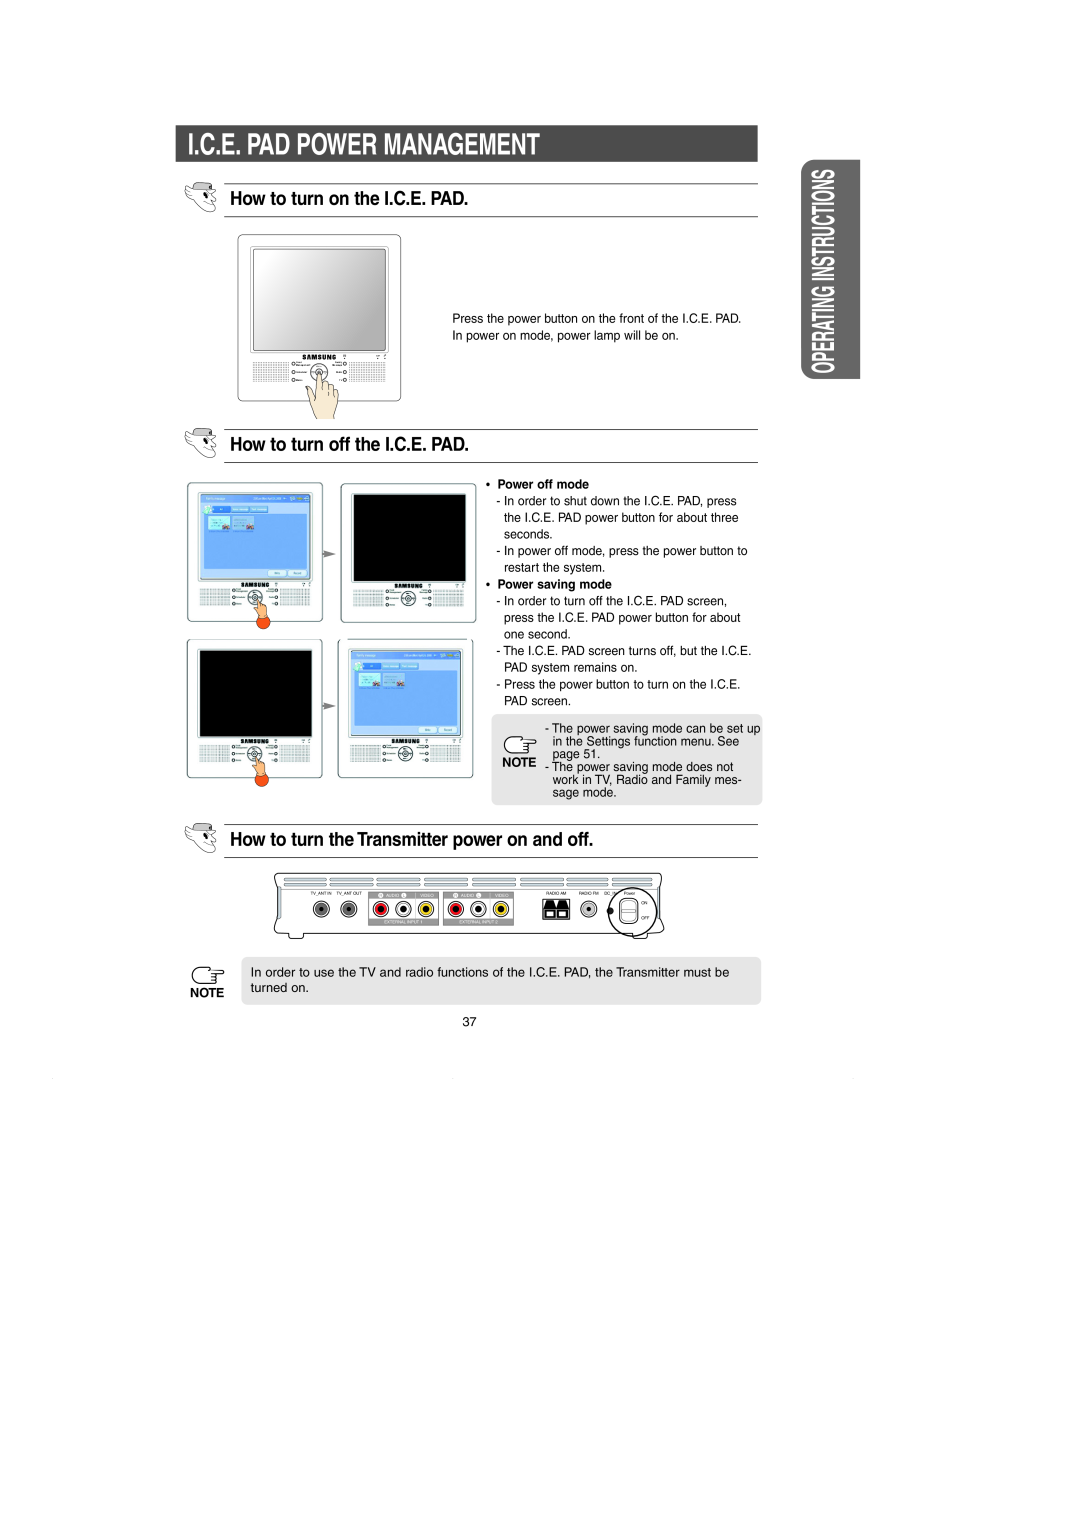 Samsung RH269LBSH I.C.E. Pad Power Management, How to turn on the I.C.E. PAD, How to turn off the I.C.E. PAD, turned on 